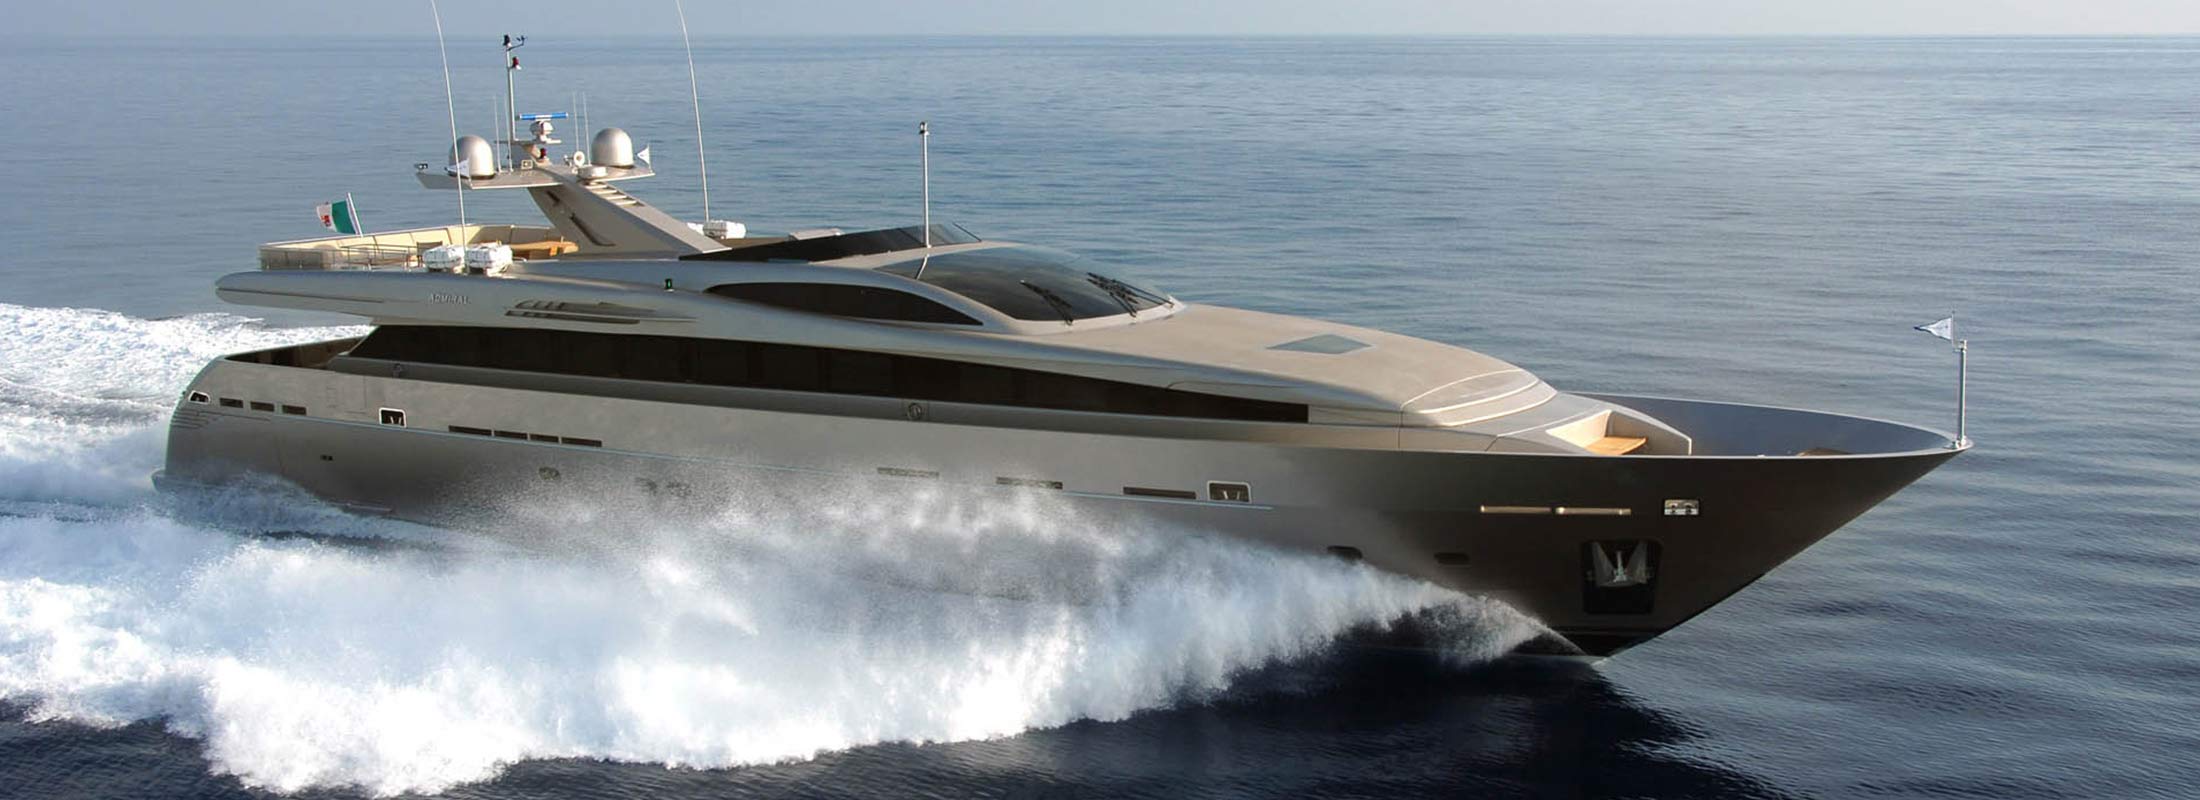 Aqua Motor Yacht for Charter Mediterranean slider 1